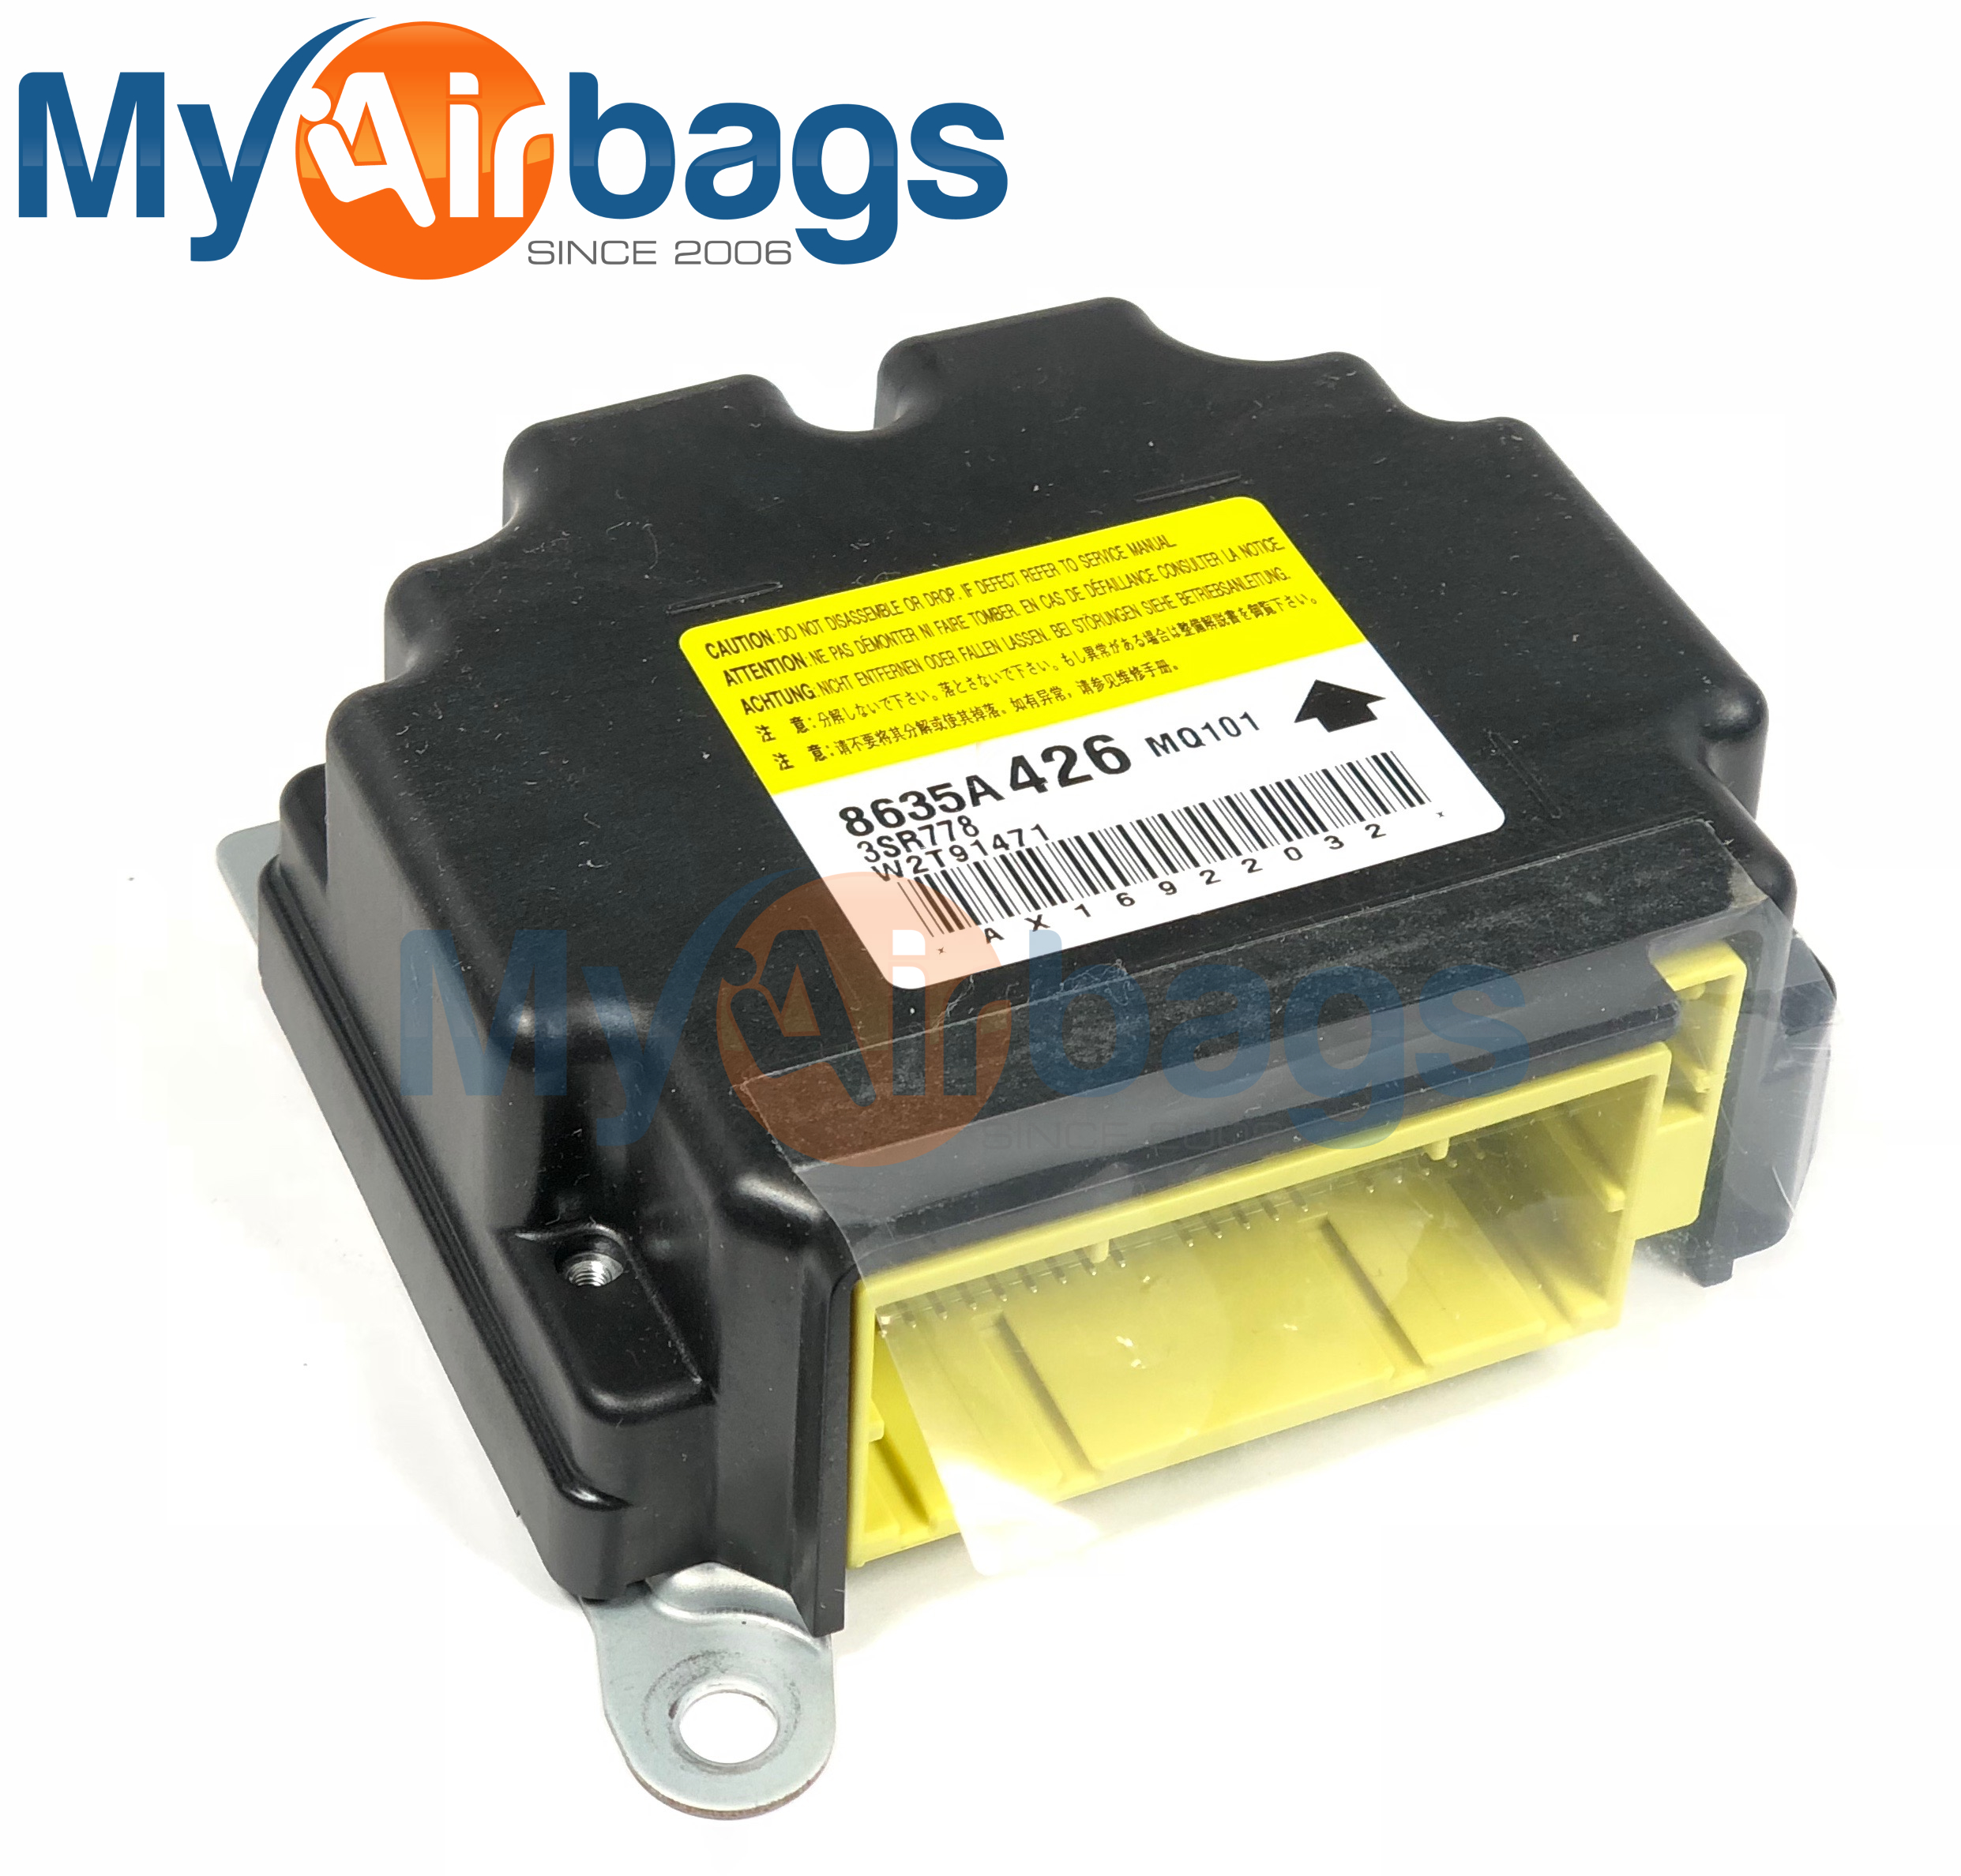 MITSUBISHI MIRAGE SRS Airbag Computer Diagnostic Control Module PART #8635A426